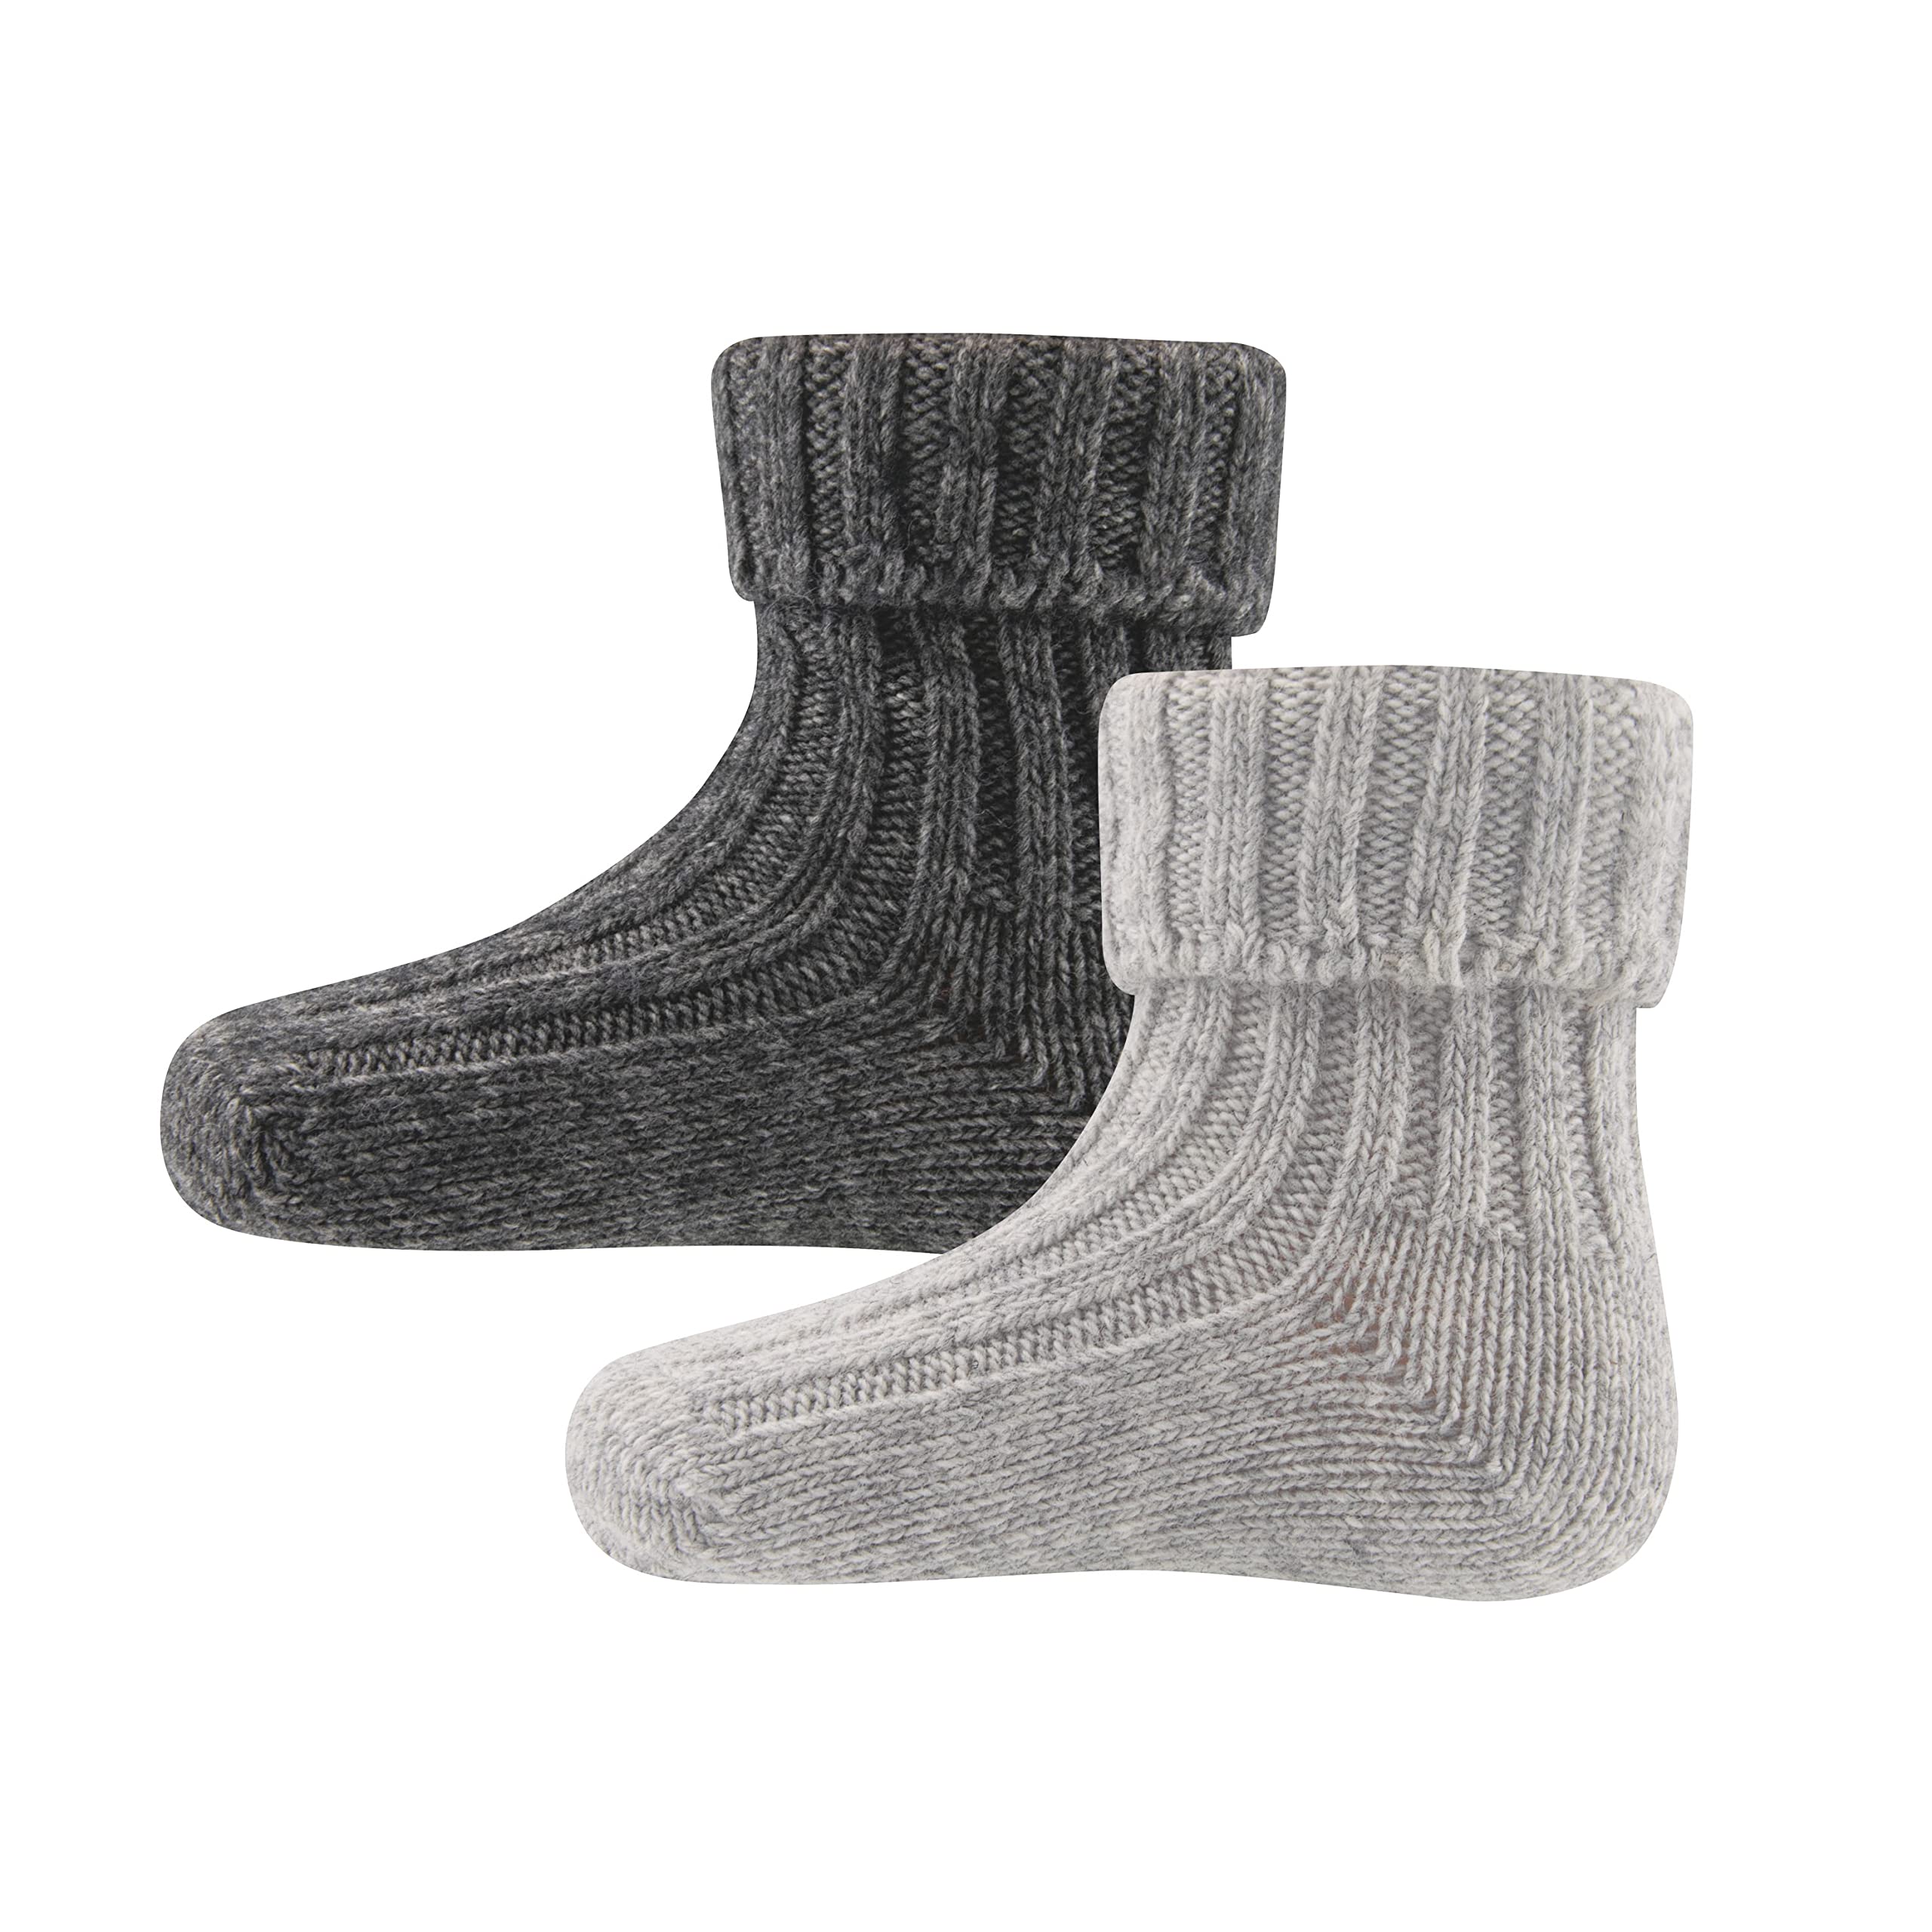 EWERS 2er-Pack Woll-Socken für Kinder, 2 Paar Kindersocken einfarbig grau, Bio-Baumwolle, GOTS zertifiziert, MADE IN EUROPE, hell- & dunkelgrau, Größe 39-42